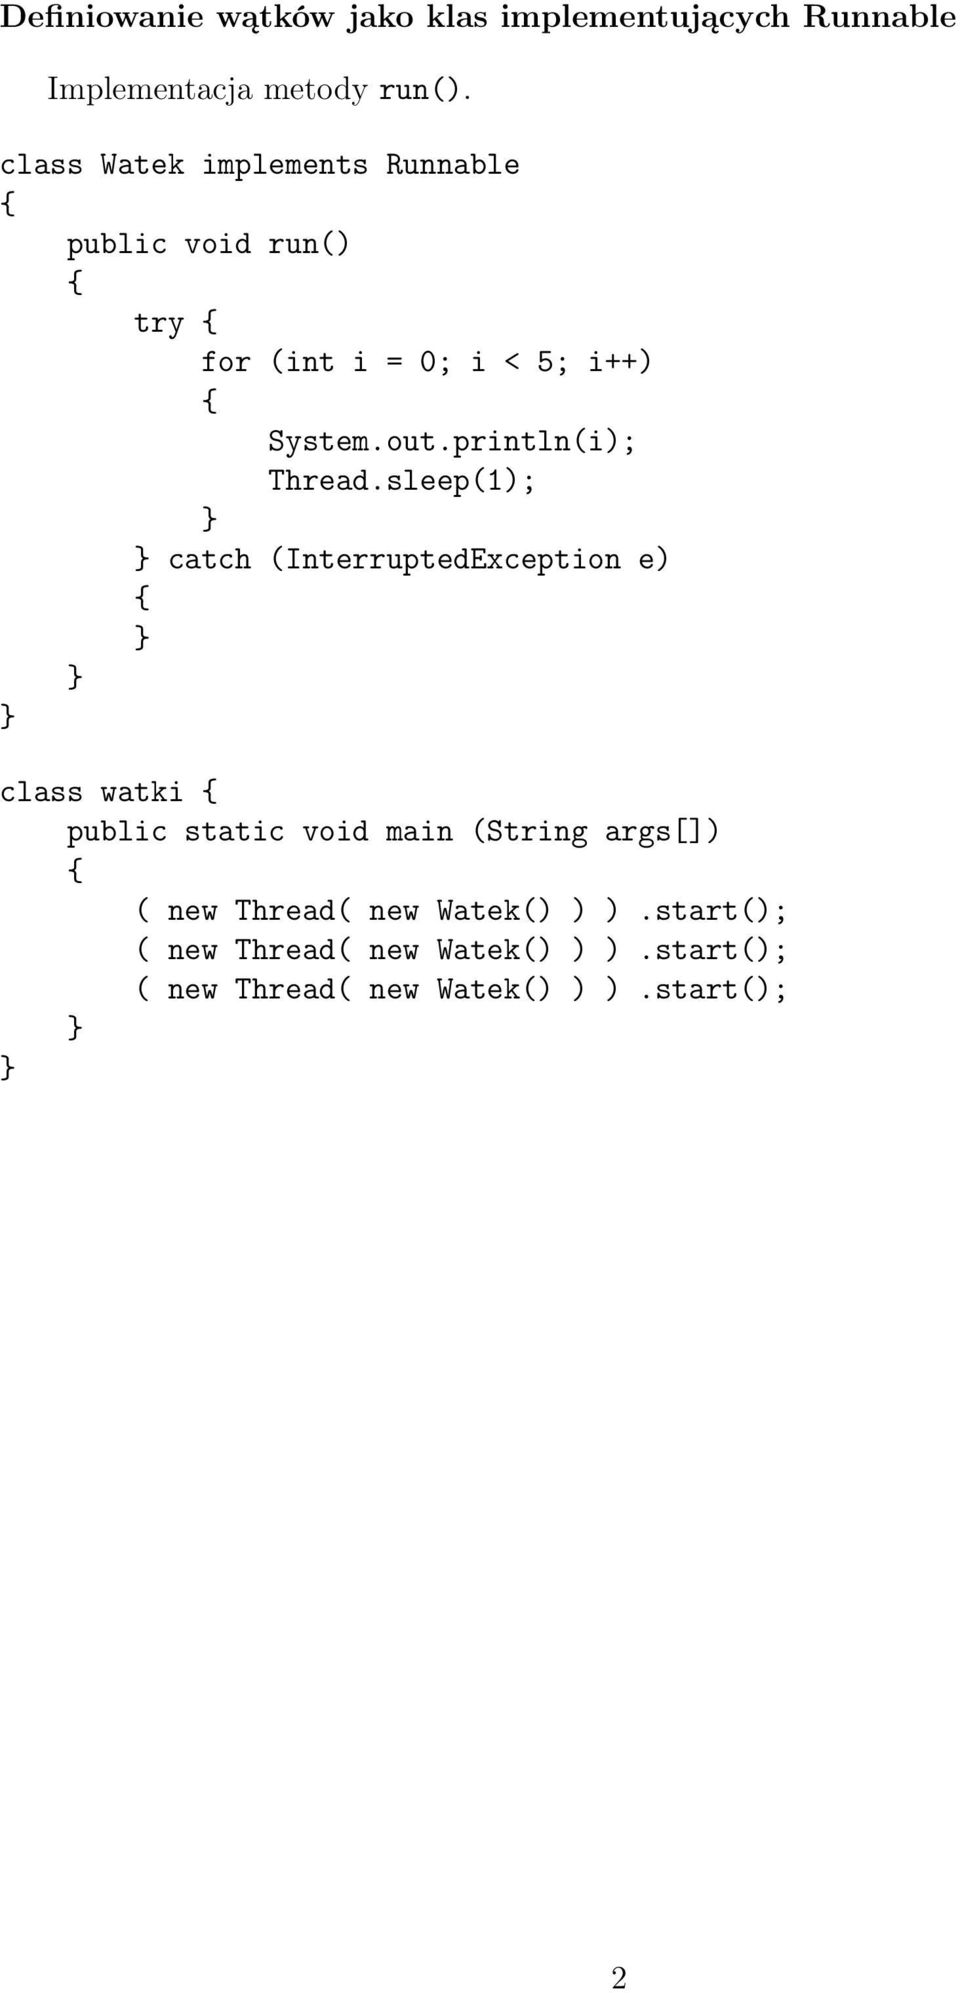 println(i); catch (InterruptedException e) class watki public static void main (String args[]) (